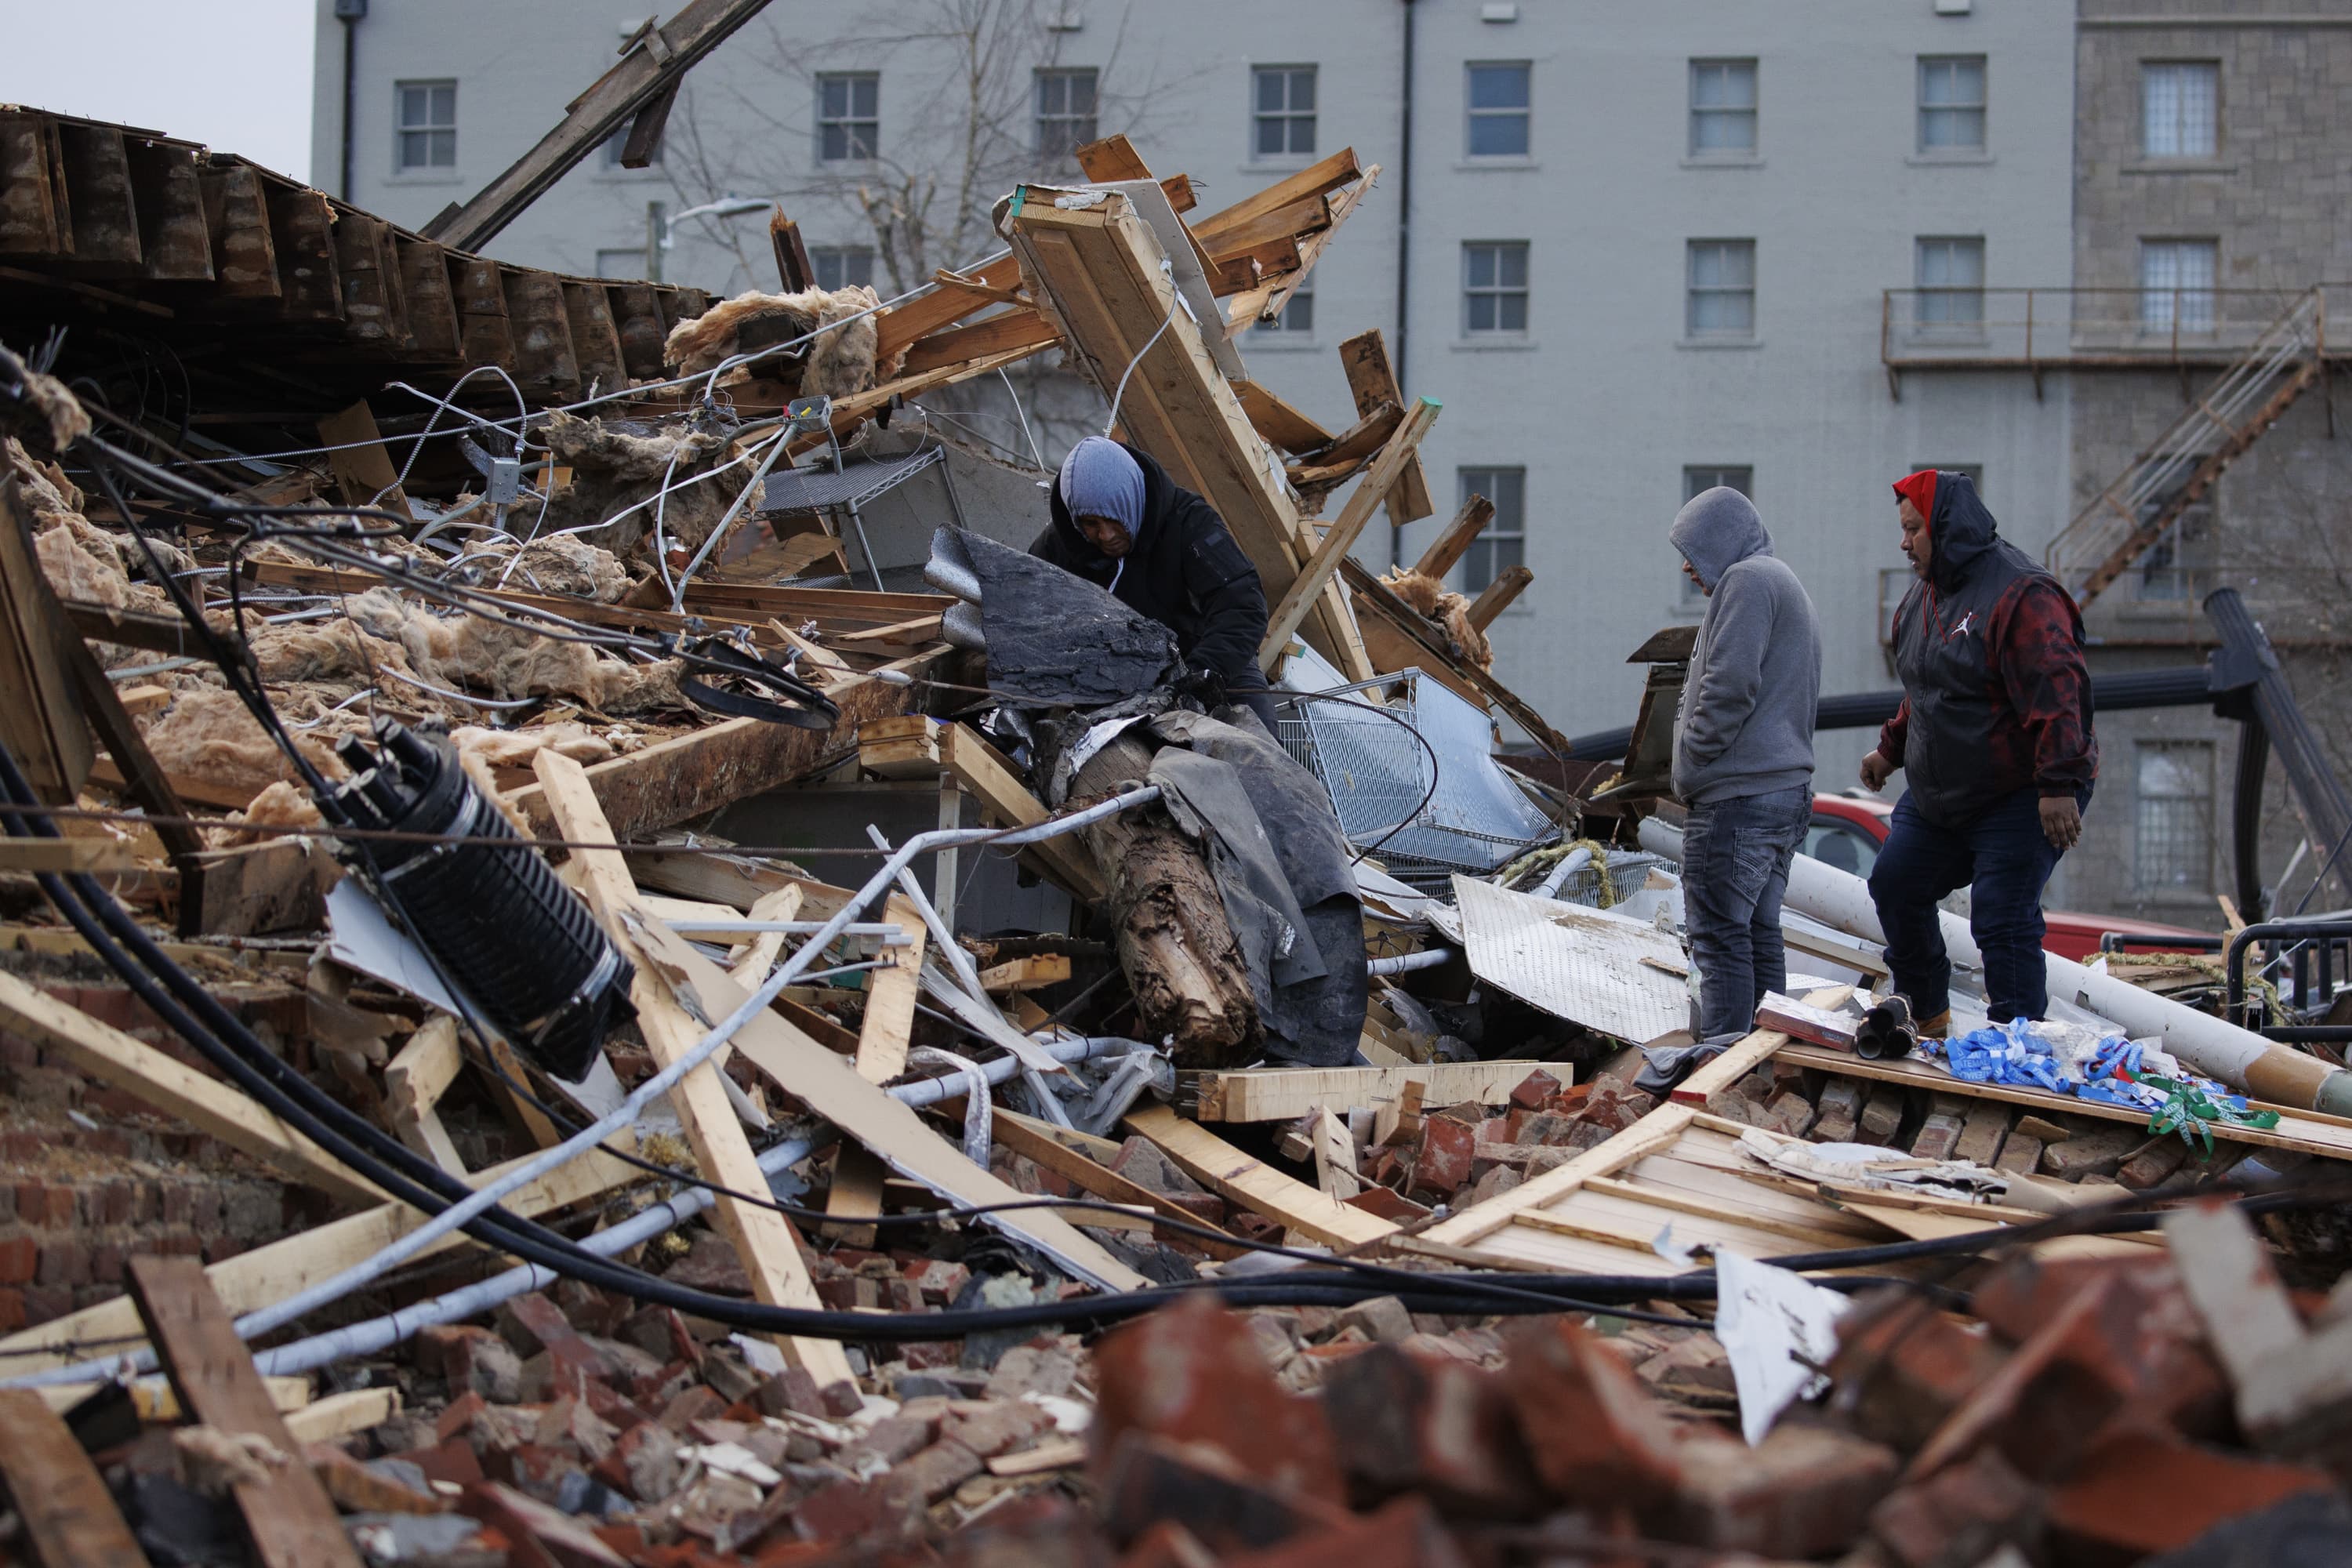 Kentucky governor declares state of emergency after deadly tornado, asks Biden for assistance